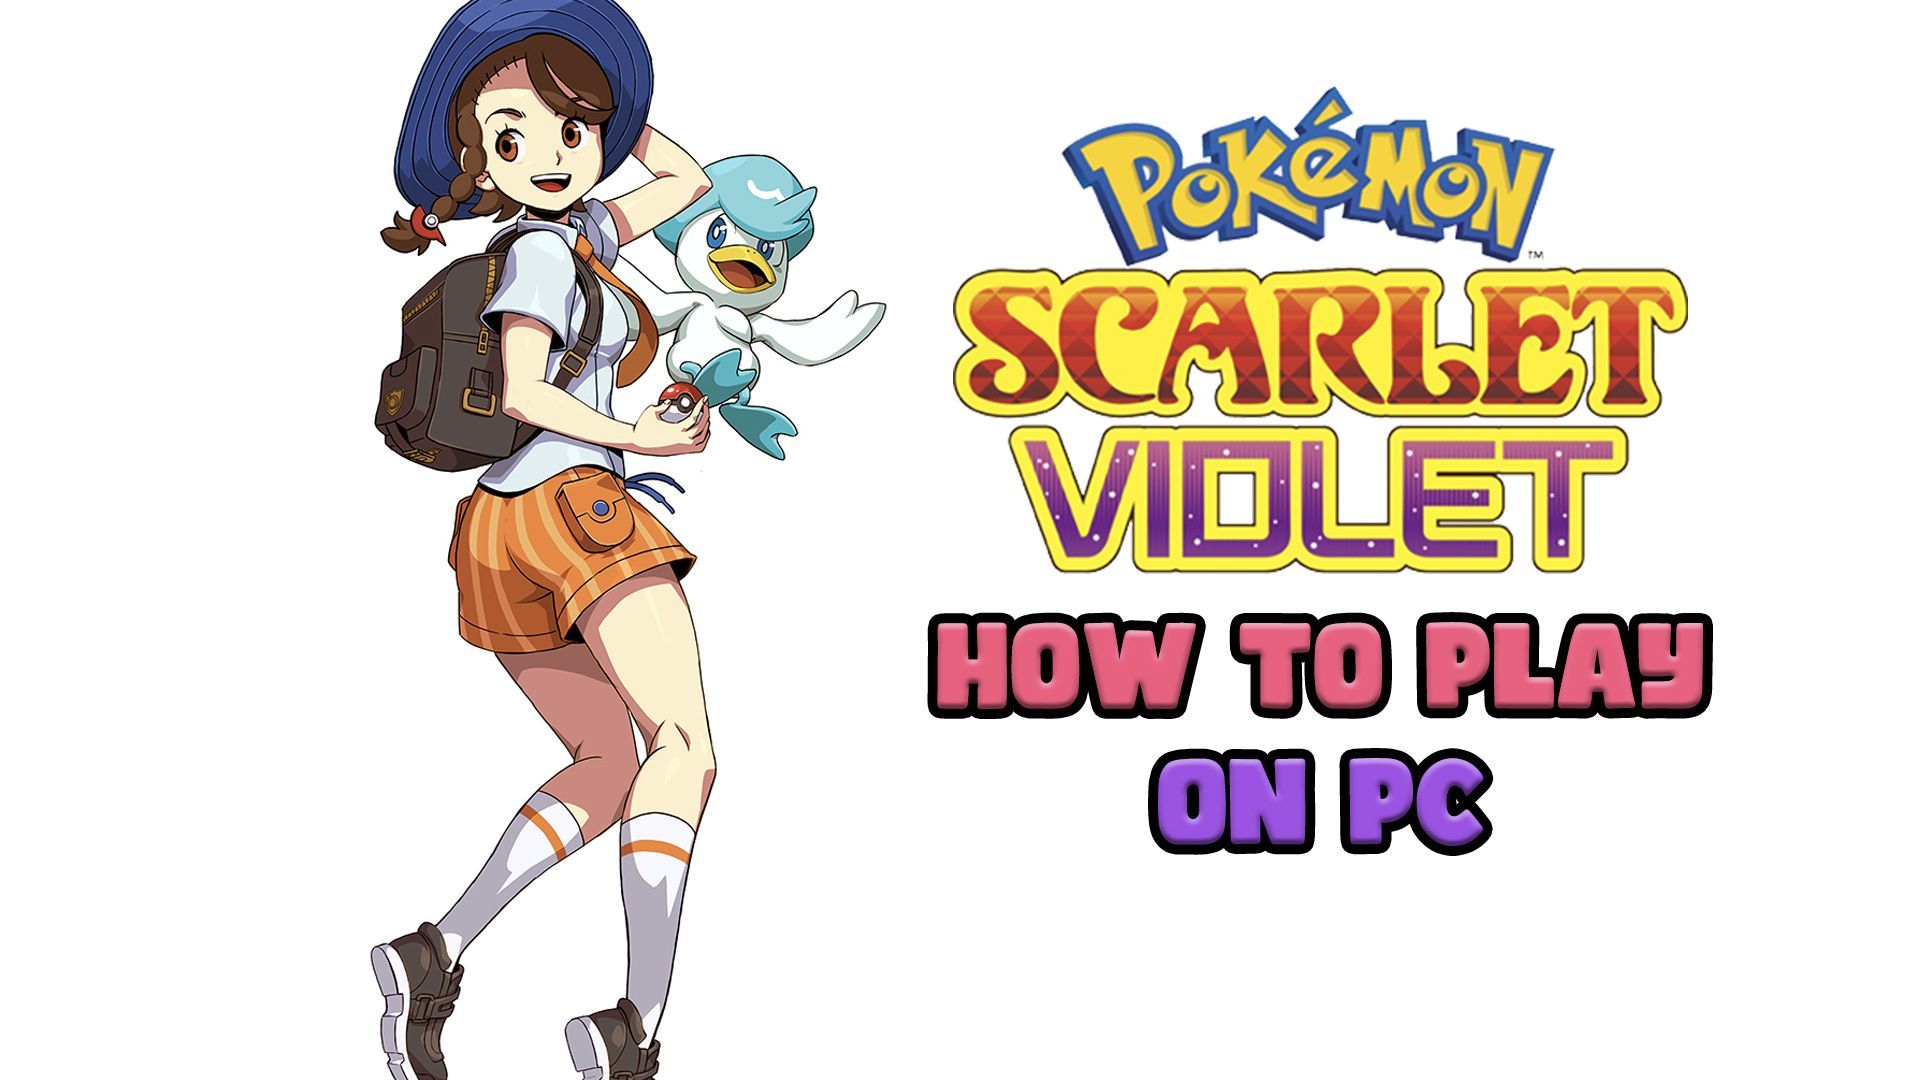 Play Pokémon Scarlet and Violet On Mobile Phone - BiliBili